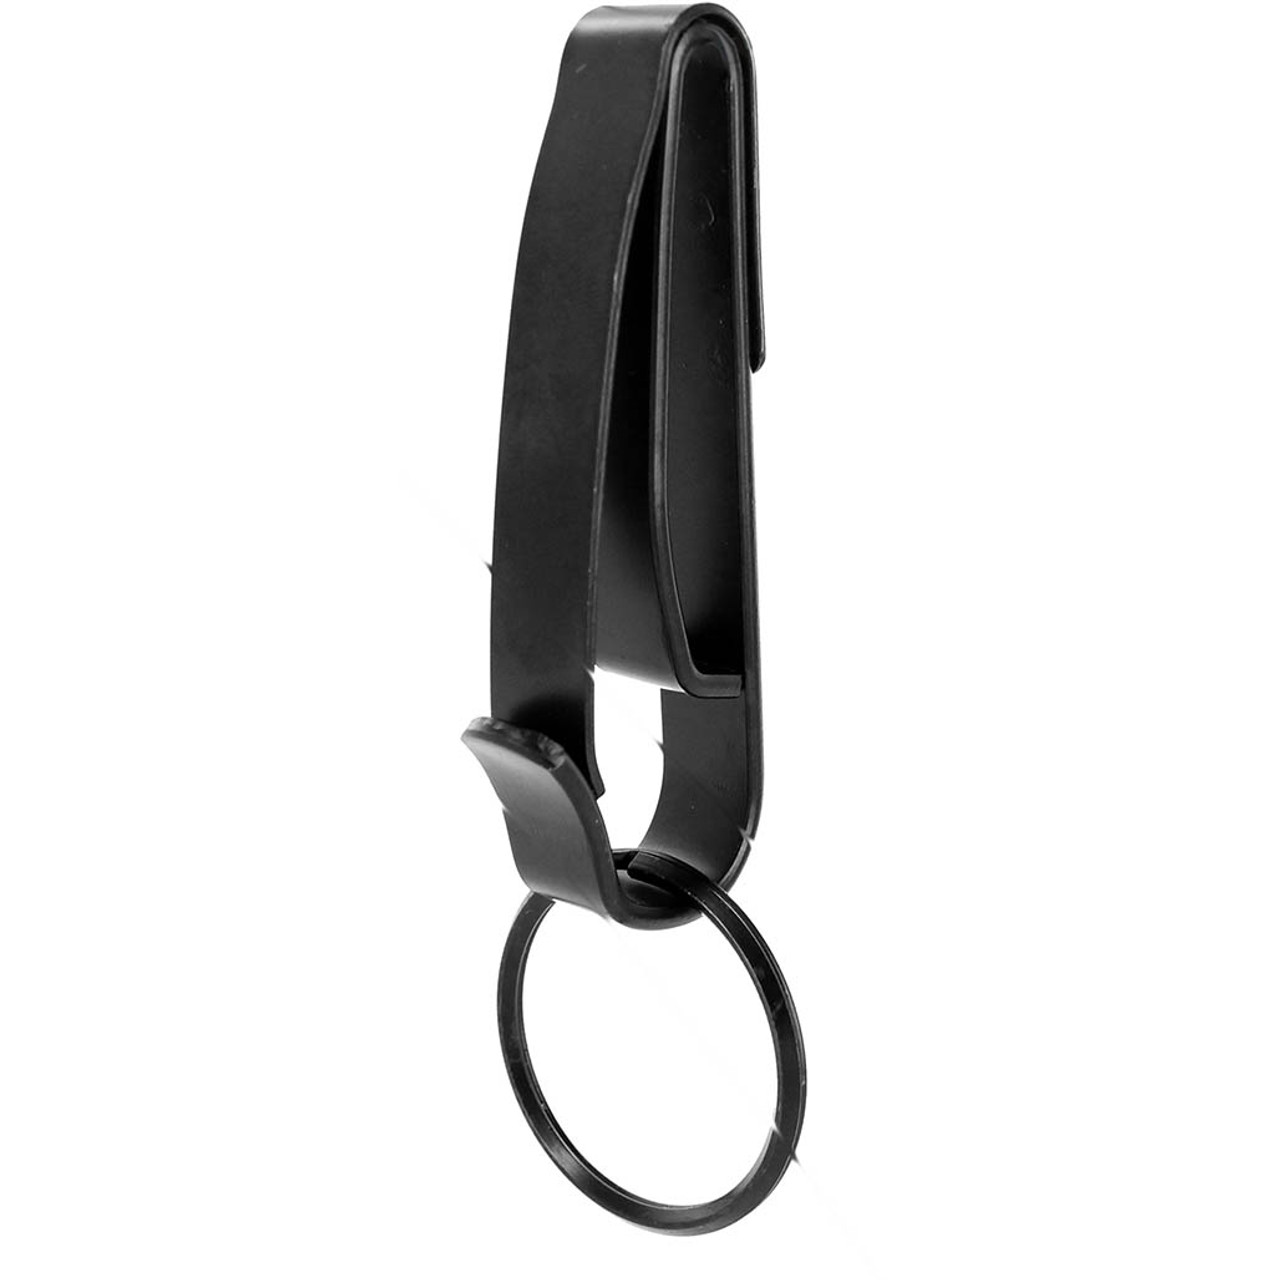 Large Heavy Duty Belt Clip Keyring - Key Ring - The Keyring Store